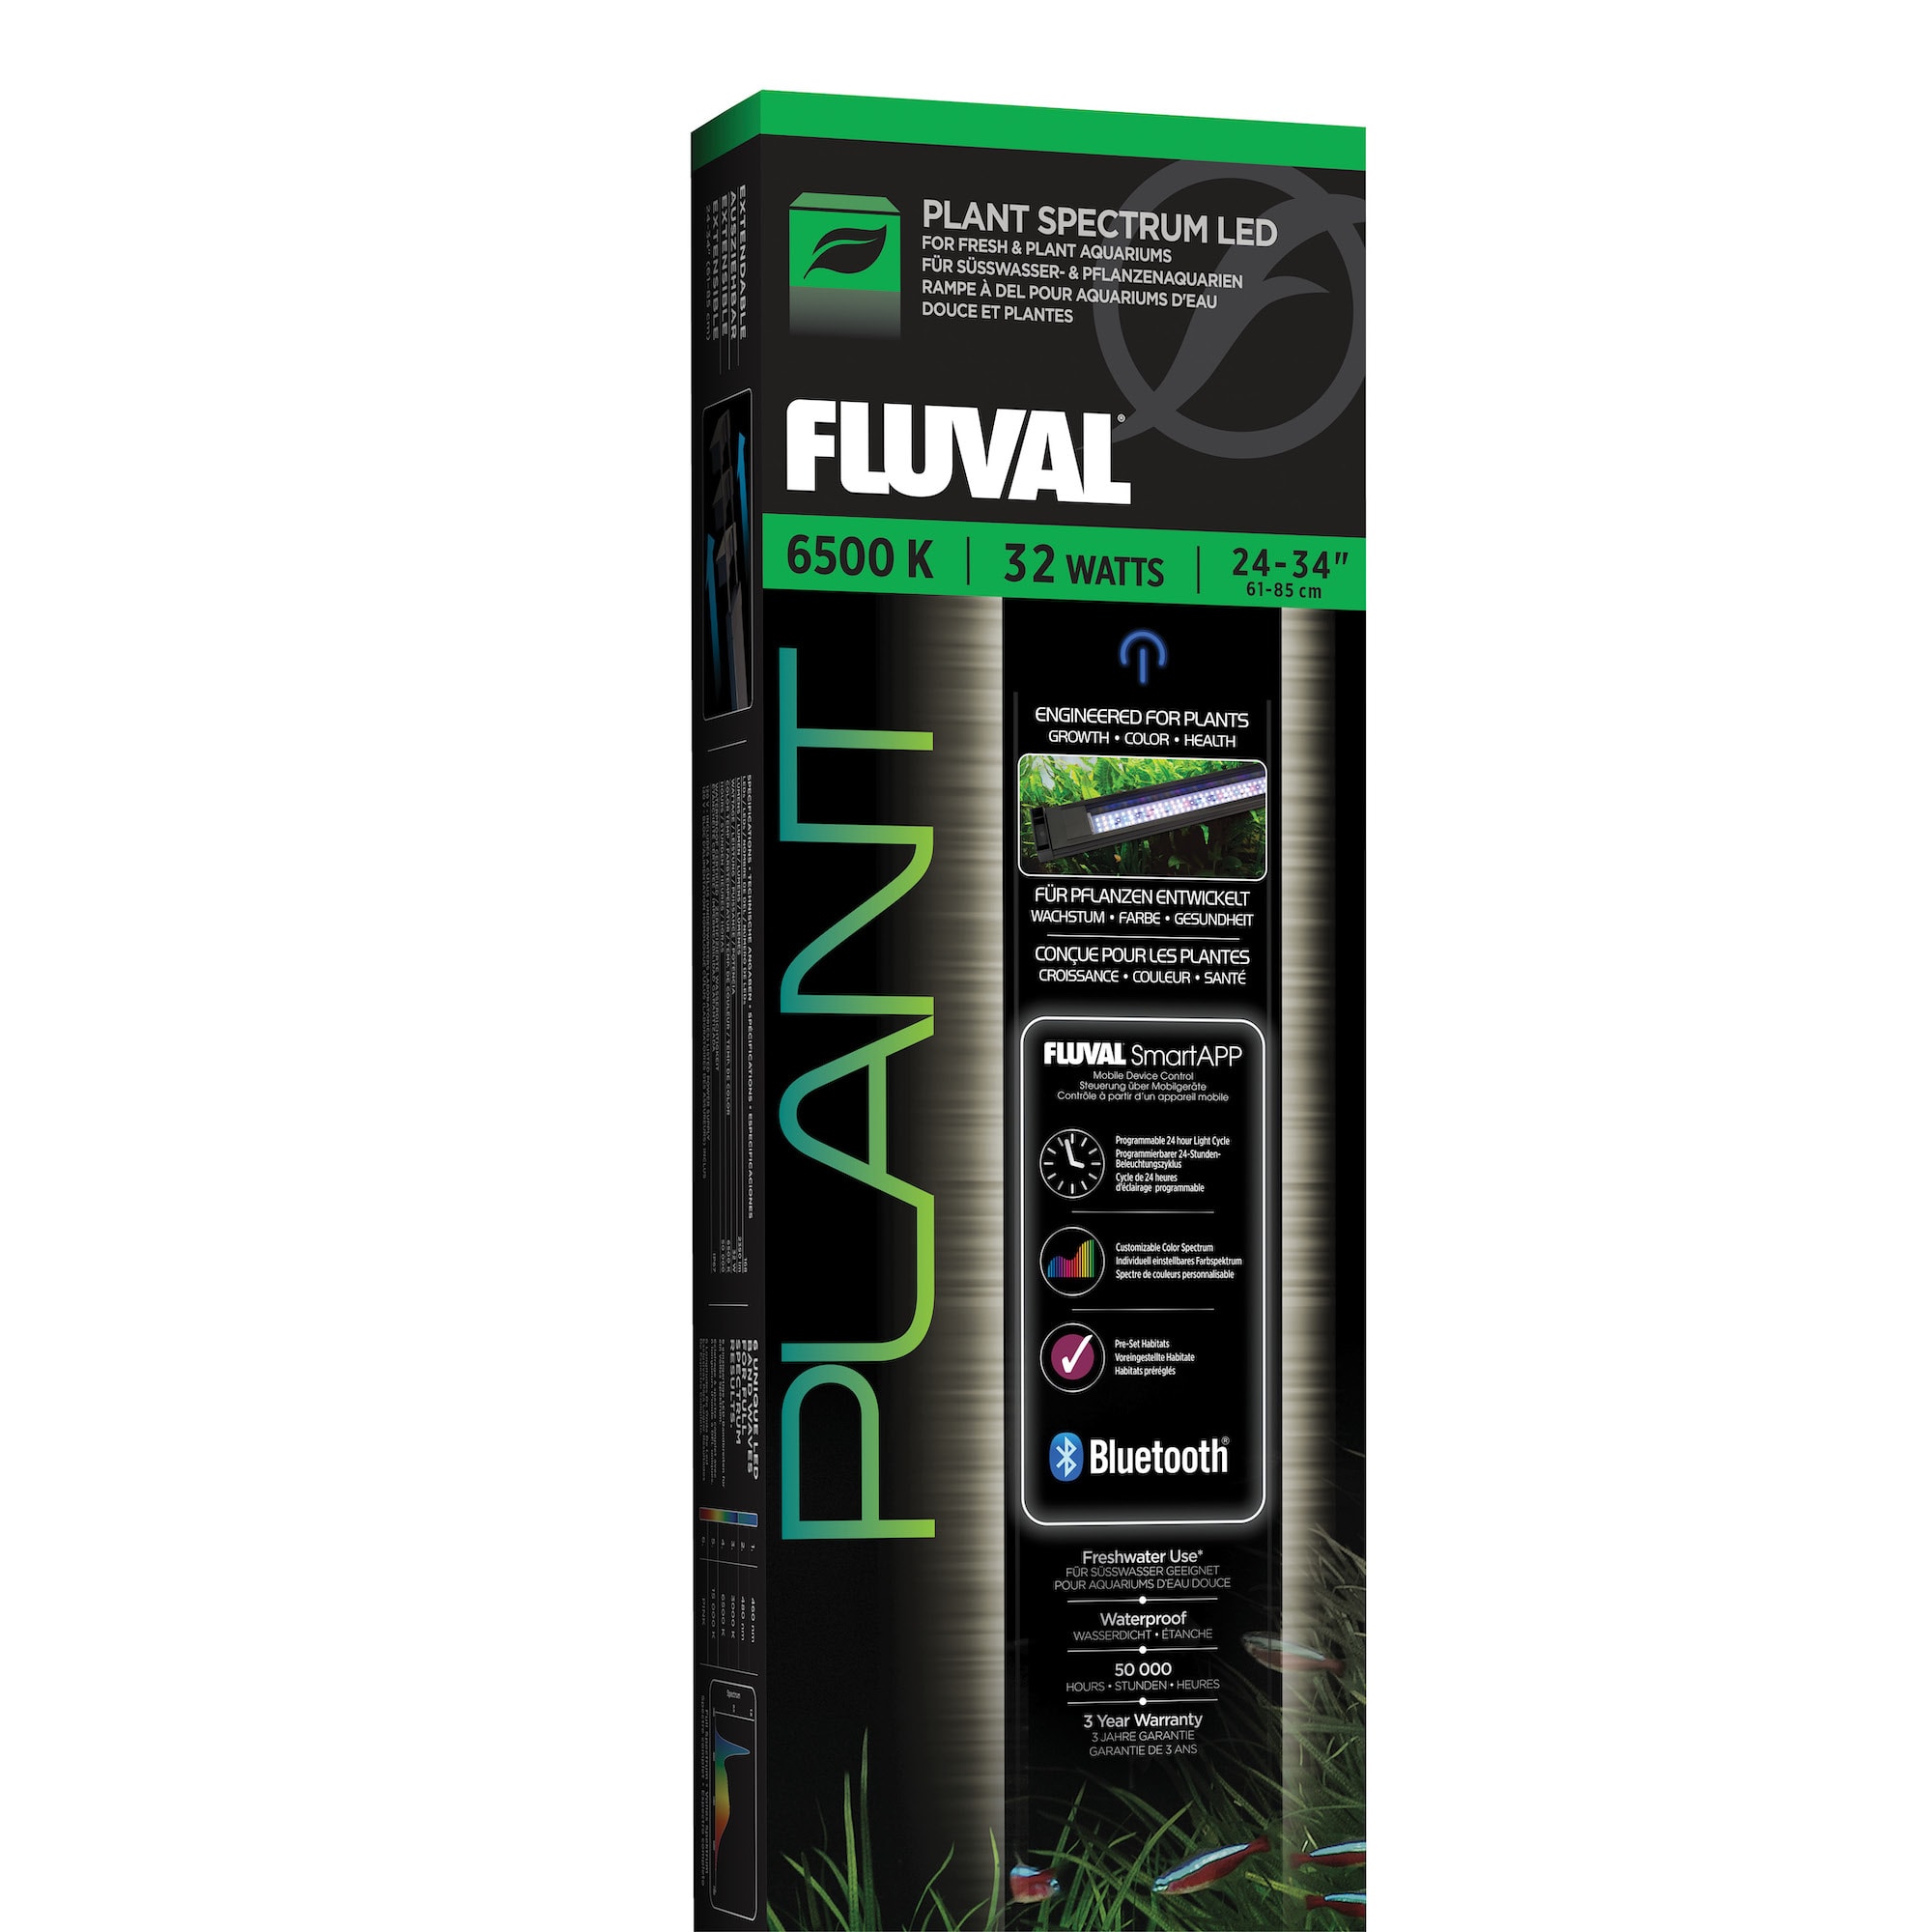 Fluval Fresh and Plant LED Light Fixture, 32 Watt | Petco